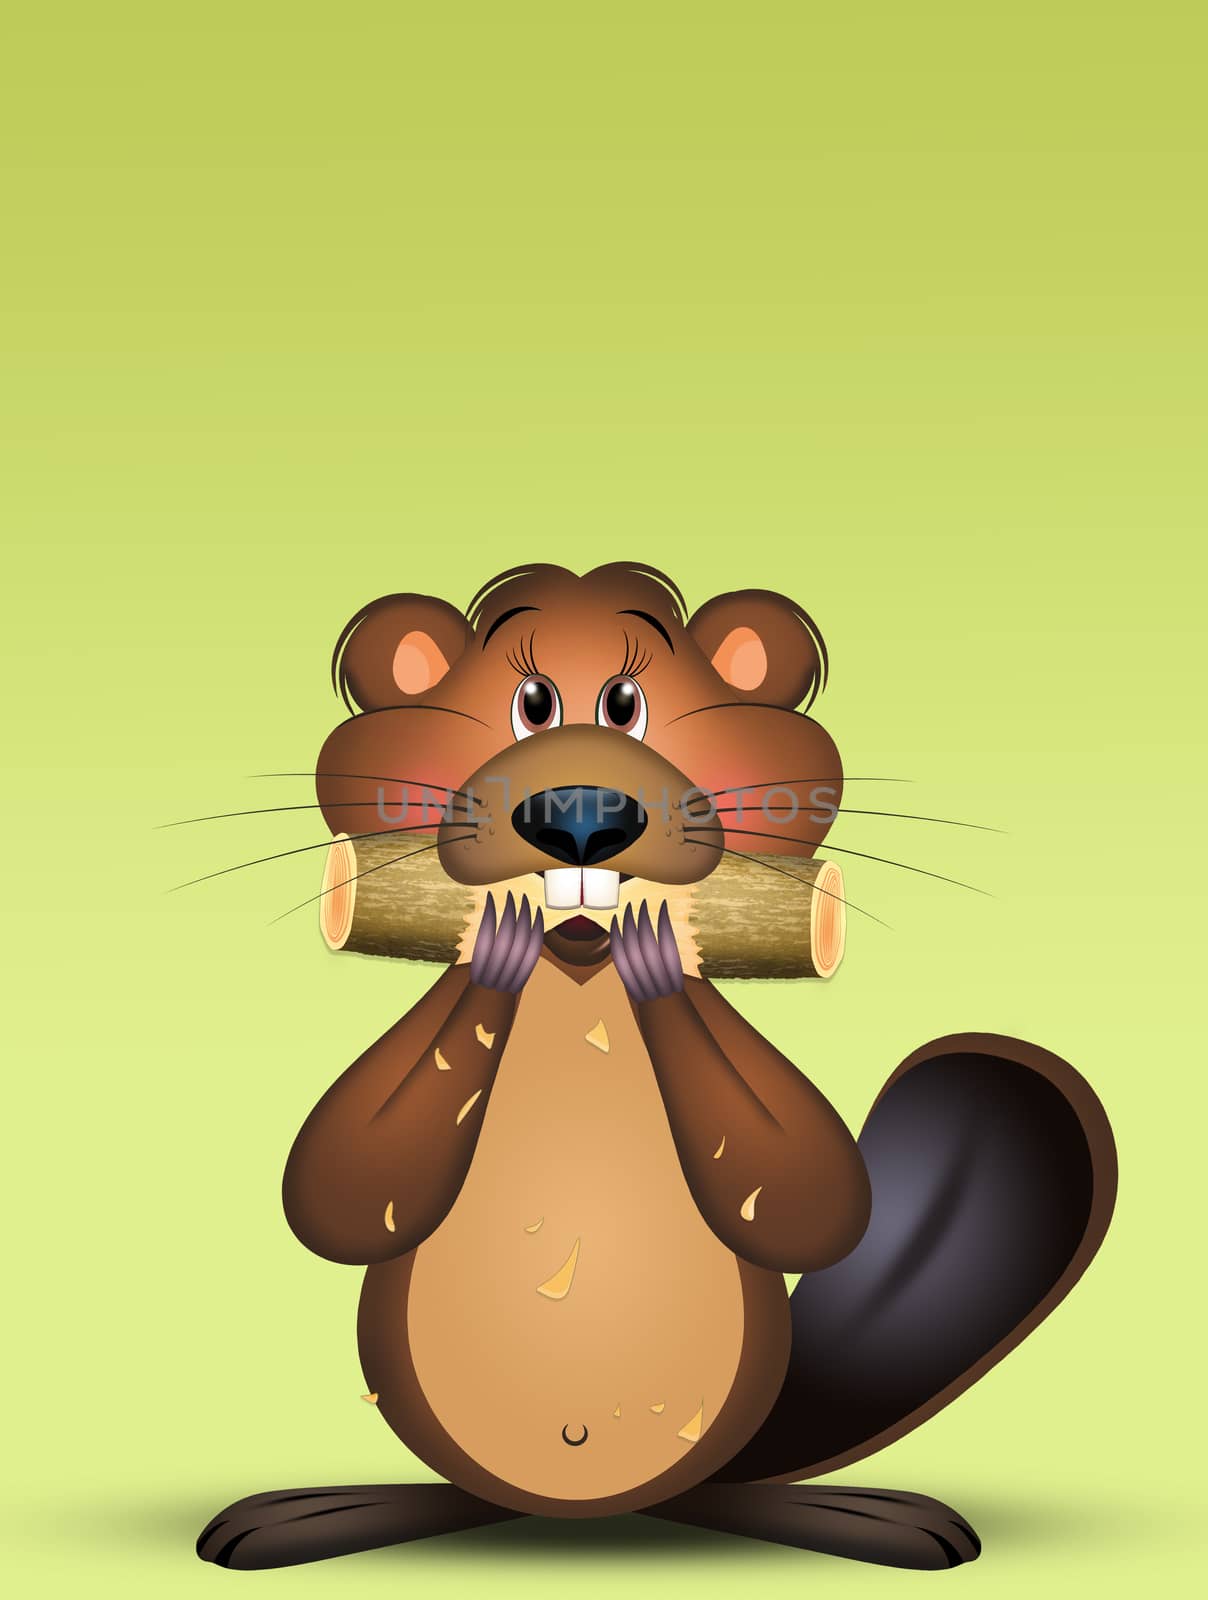 illustration of marmot gnaws the wood